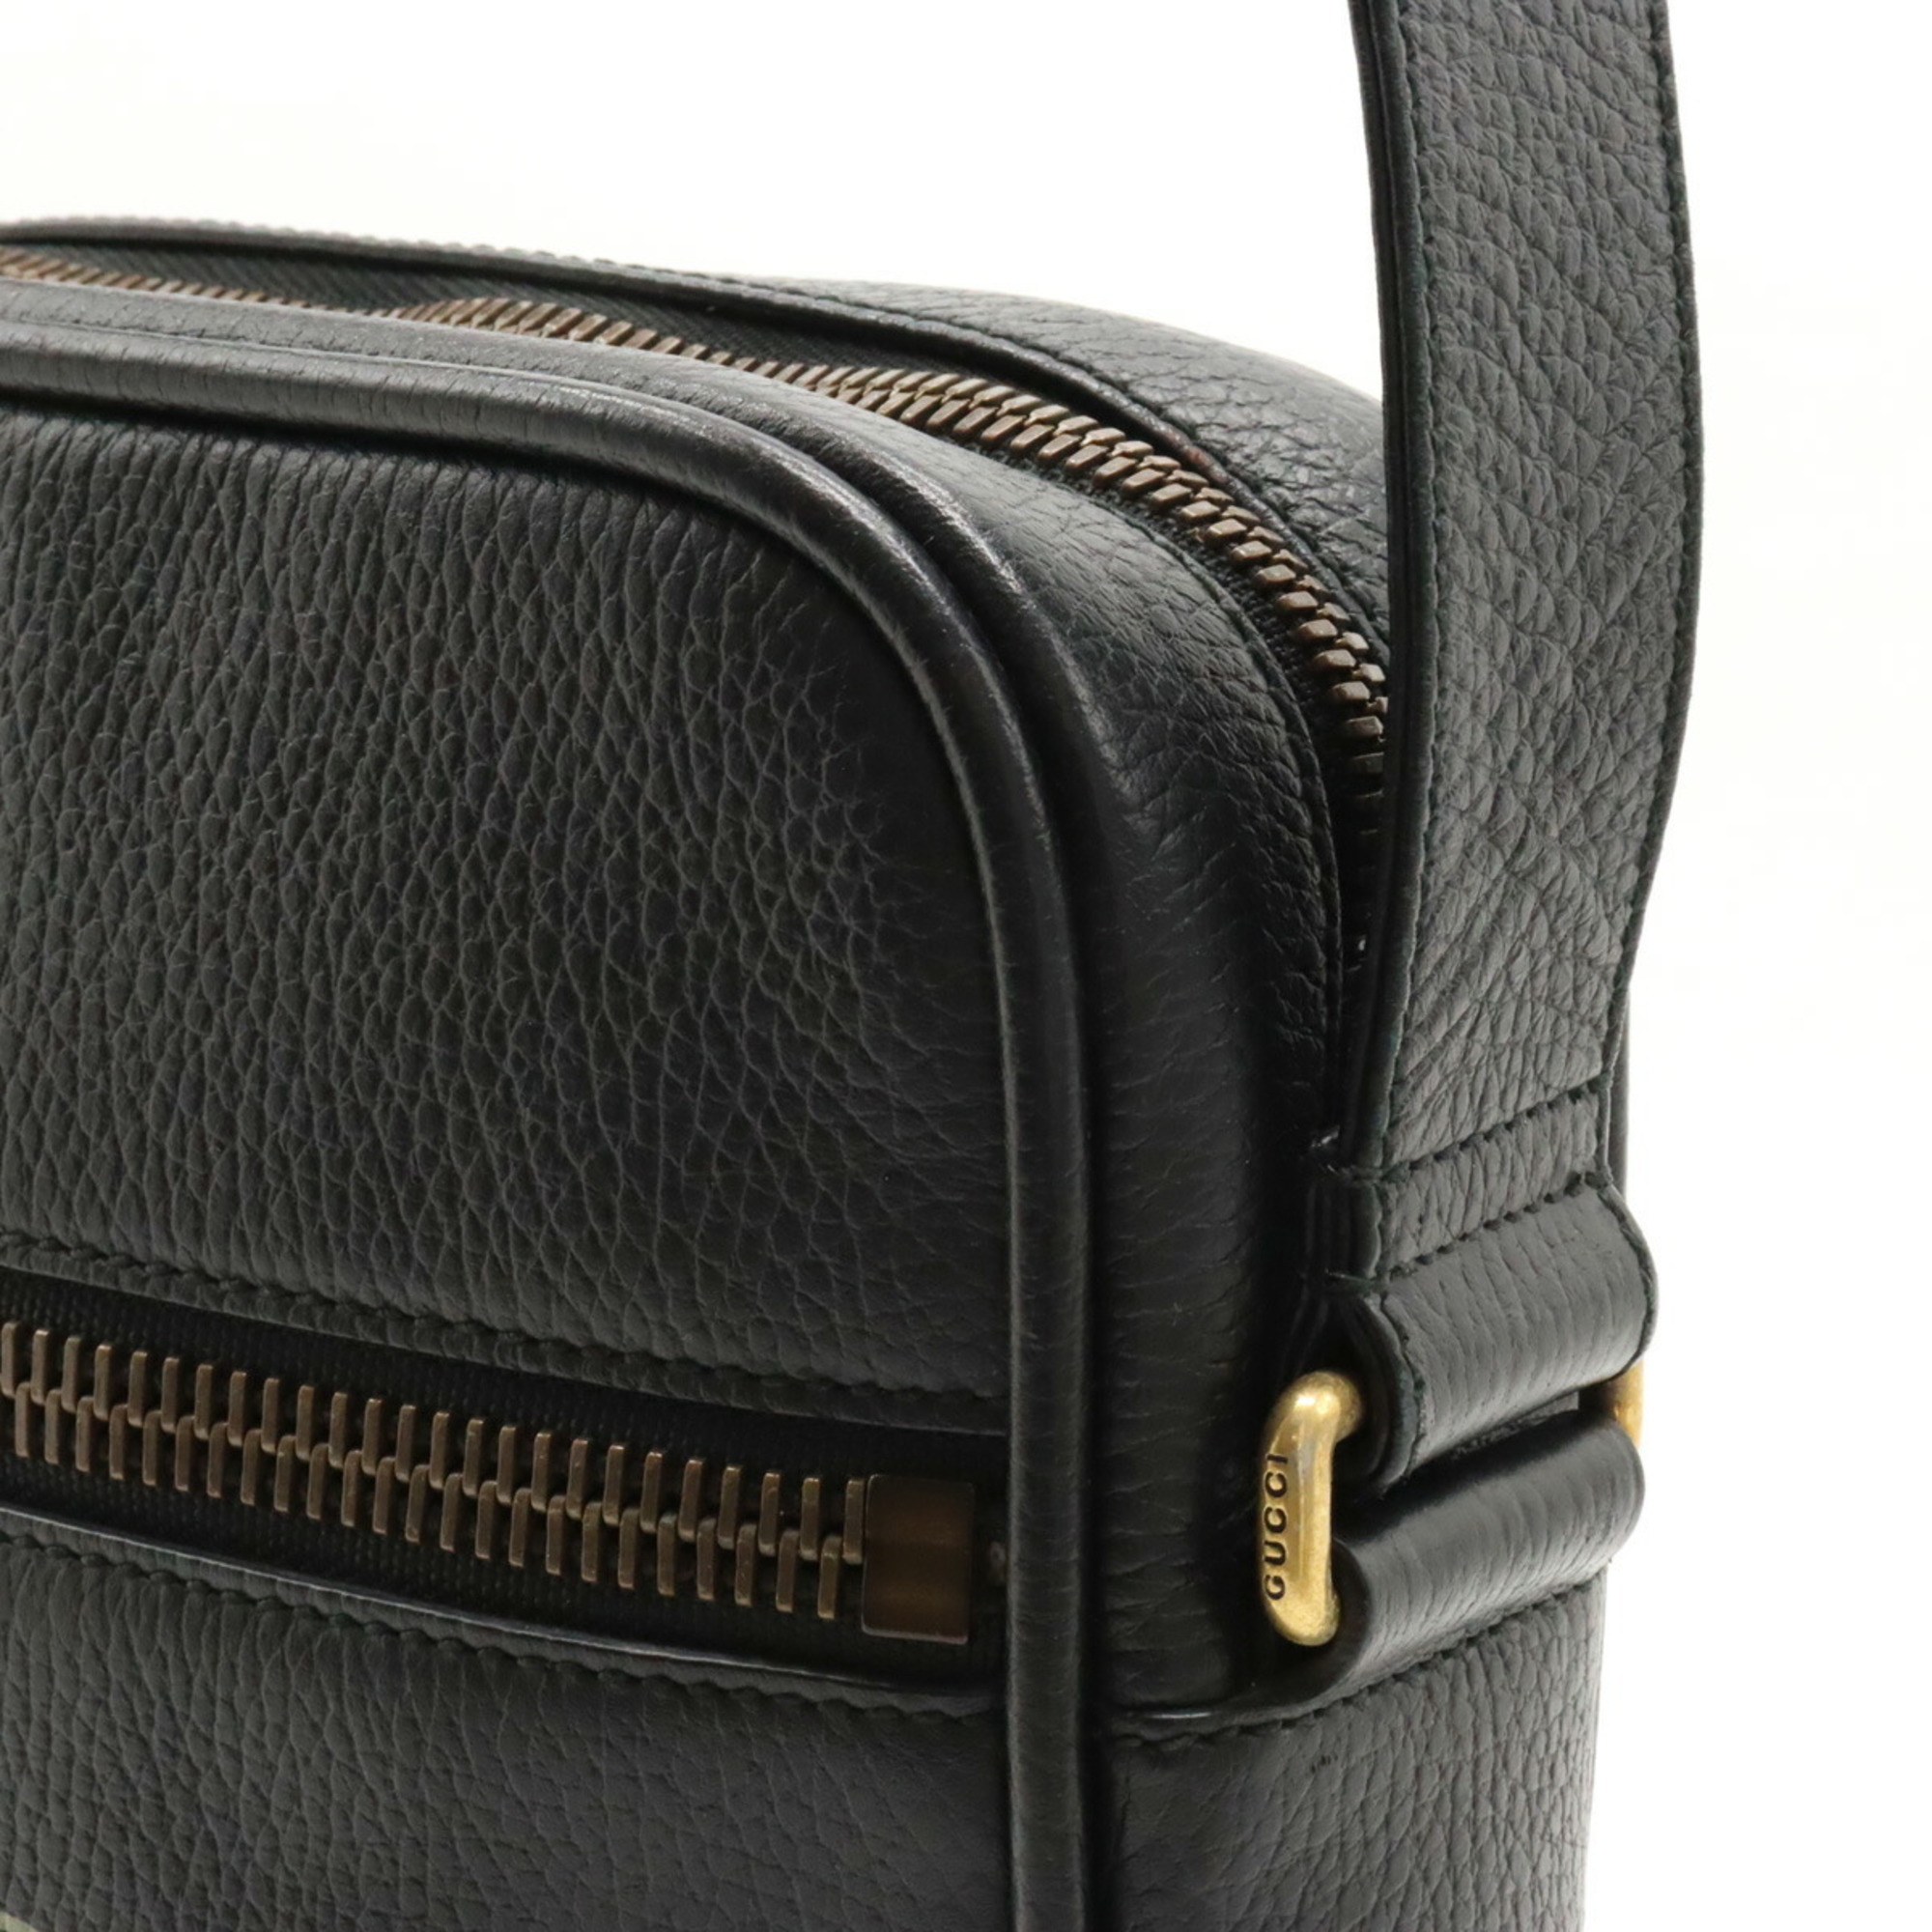 GUCCI Gucci Print Bag Shoulder Leather Black 523591